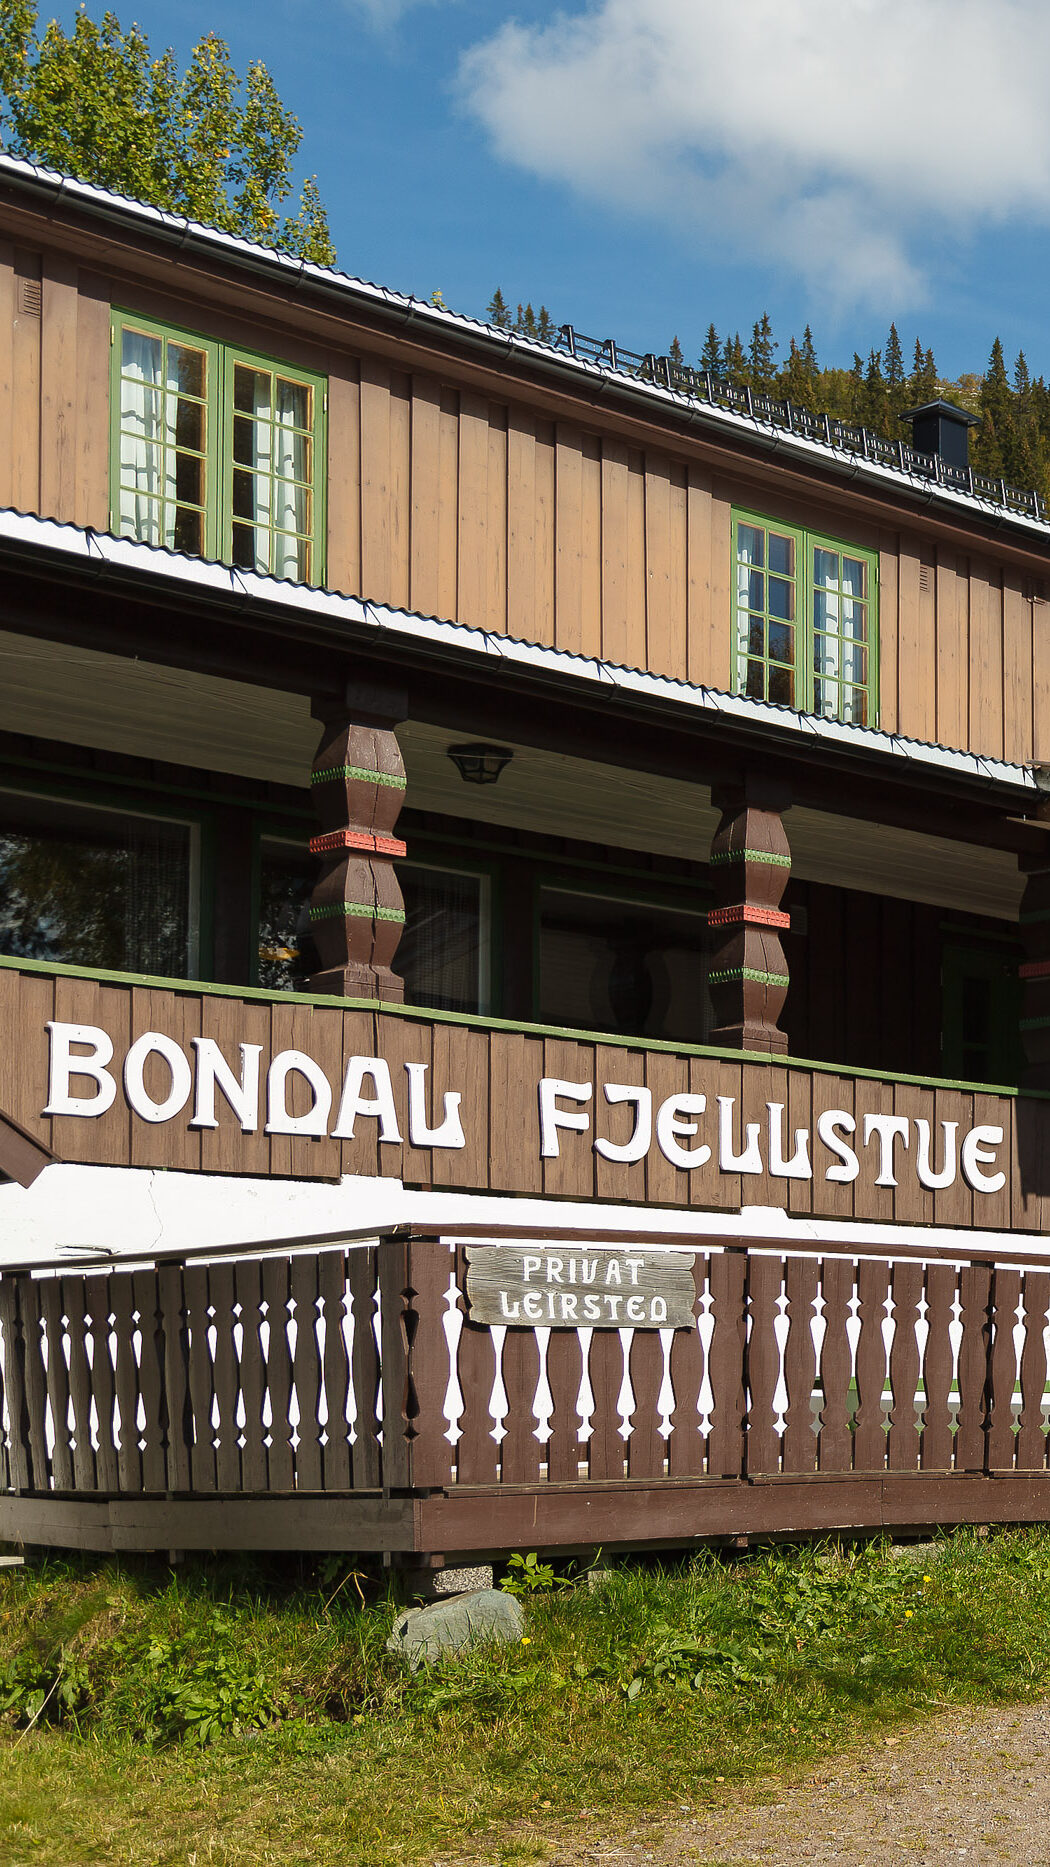 Bondal-fjellstue-scaled-aspect-ratio-9-16